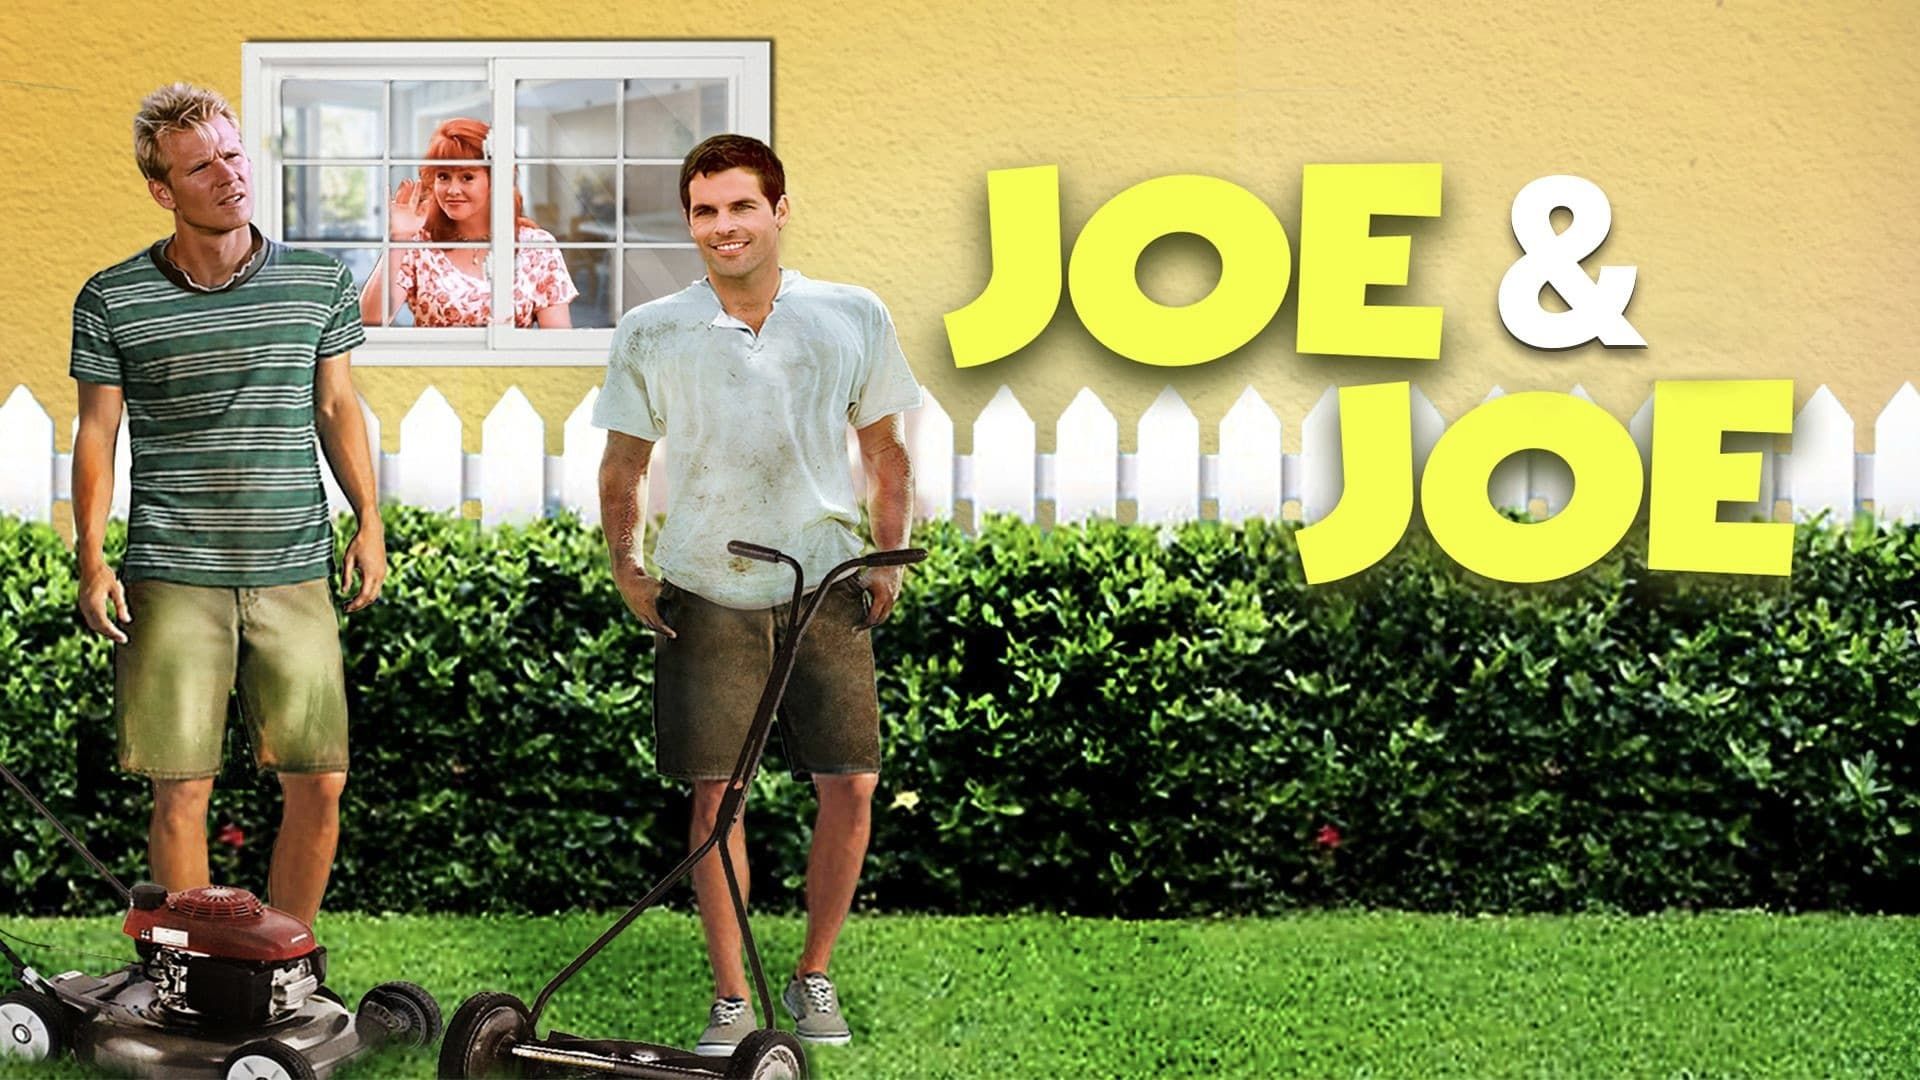 Joe & Joe background